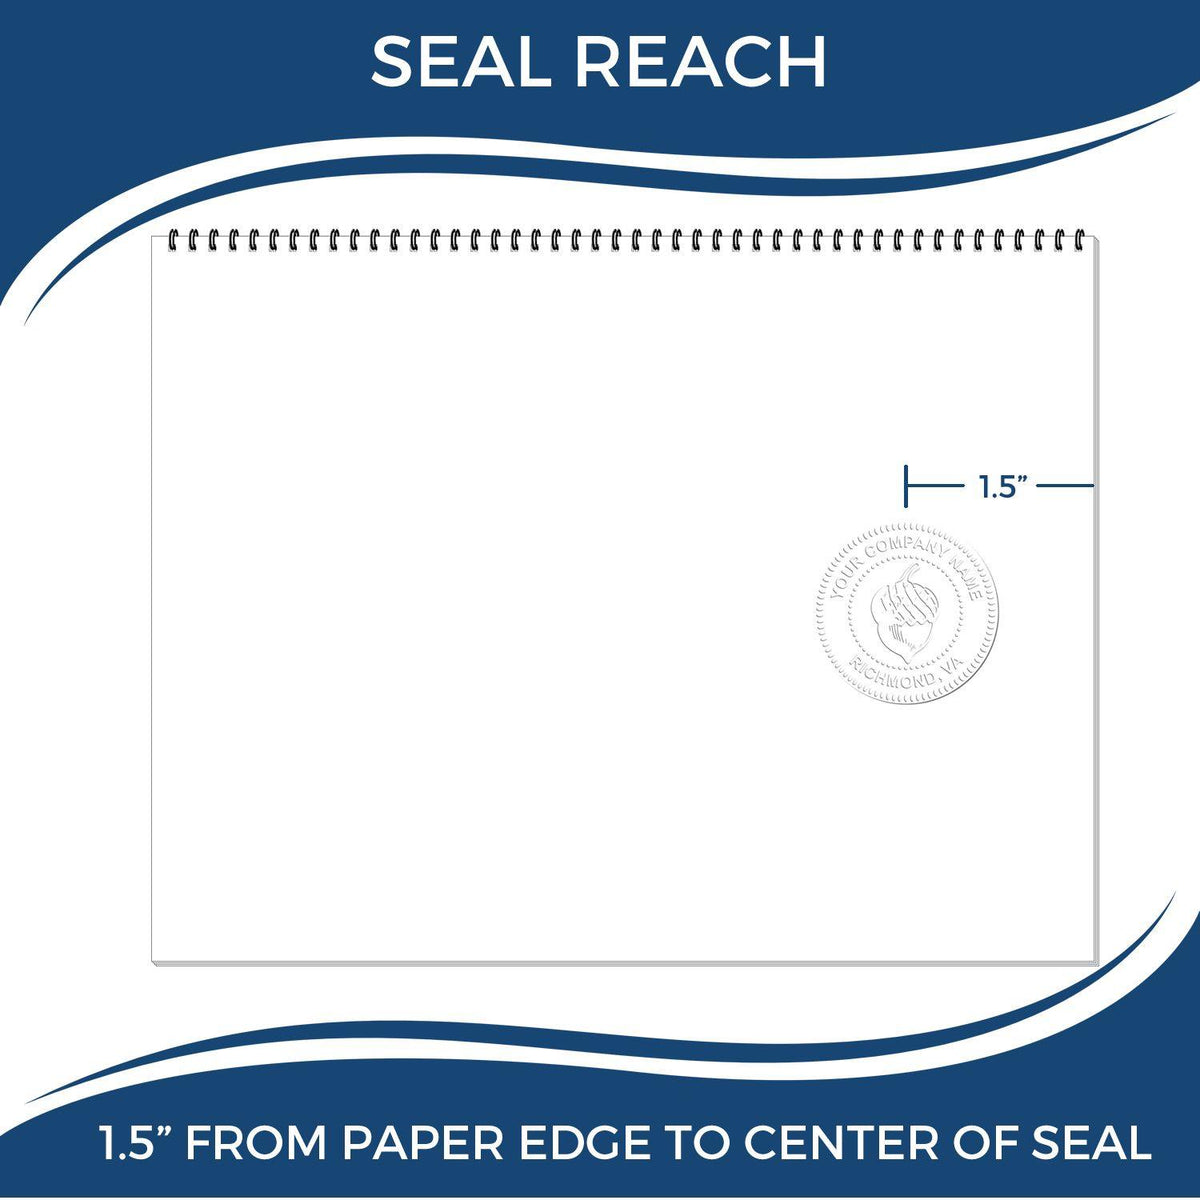 Real Estate Appraiser Pink Soft Seal Embosser - Engineer Seal Stamps - Embosser Type_Handheld, Embosser Type_Soft Seal, Type of Use_Professional